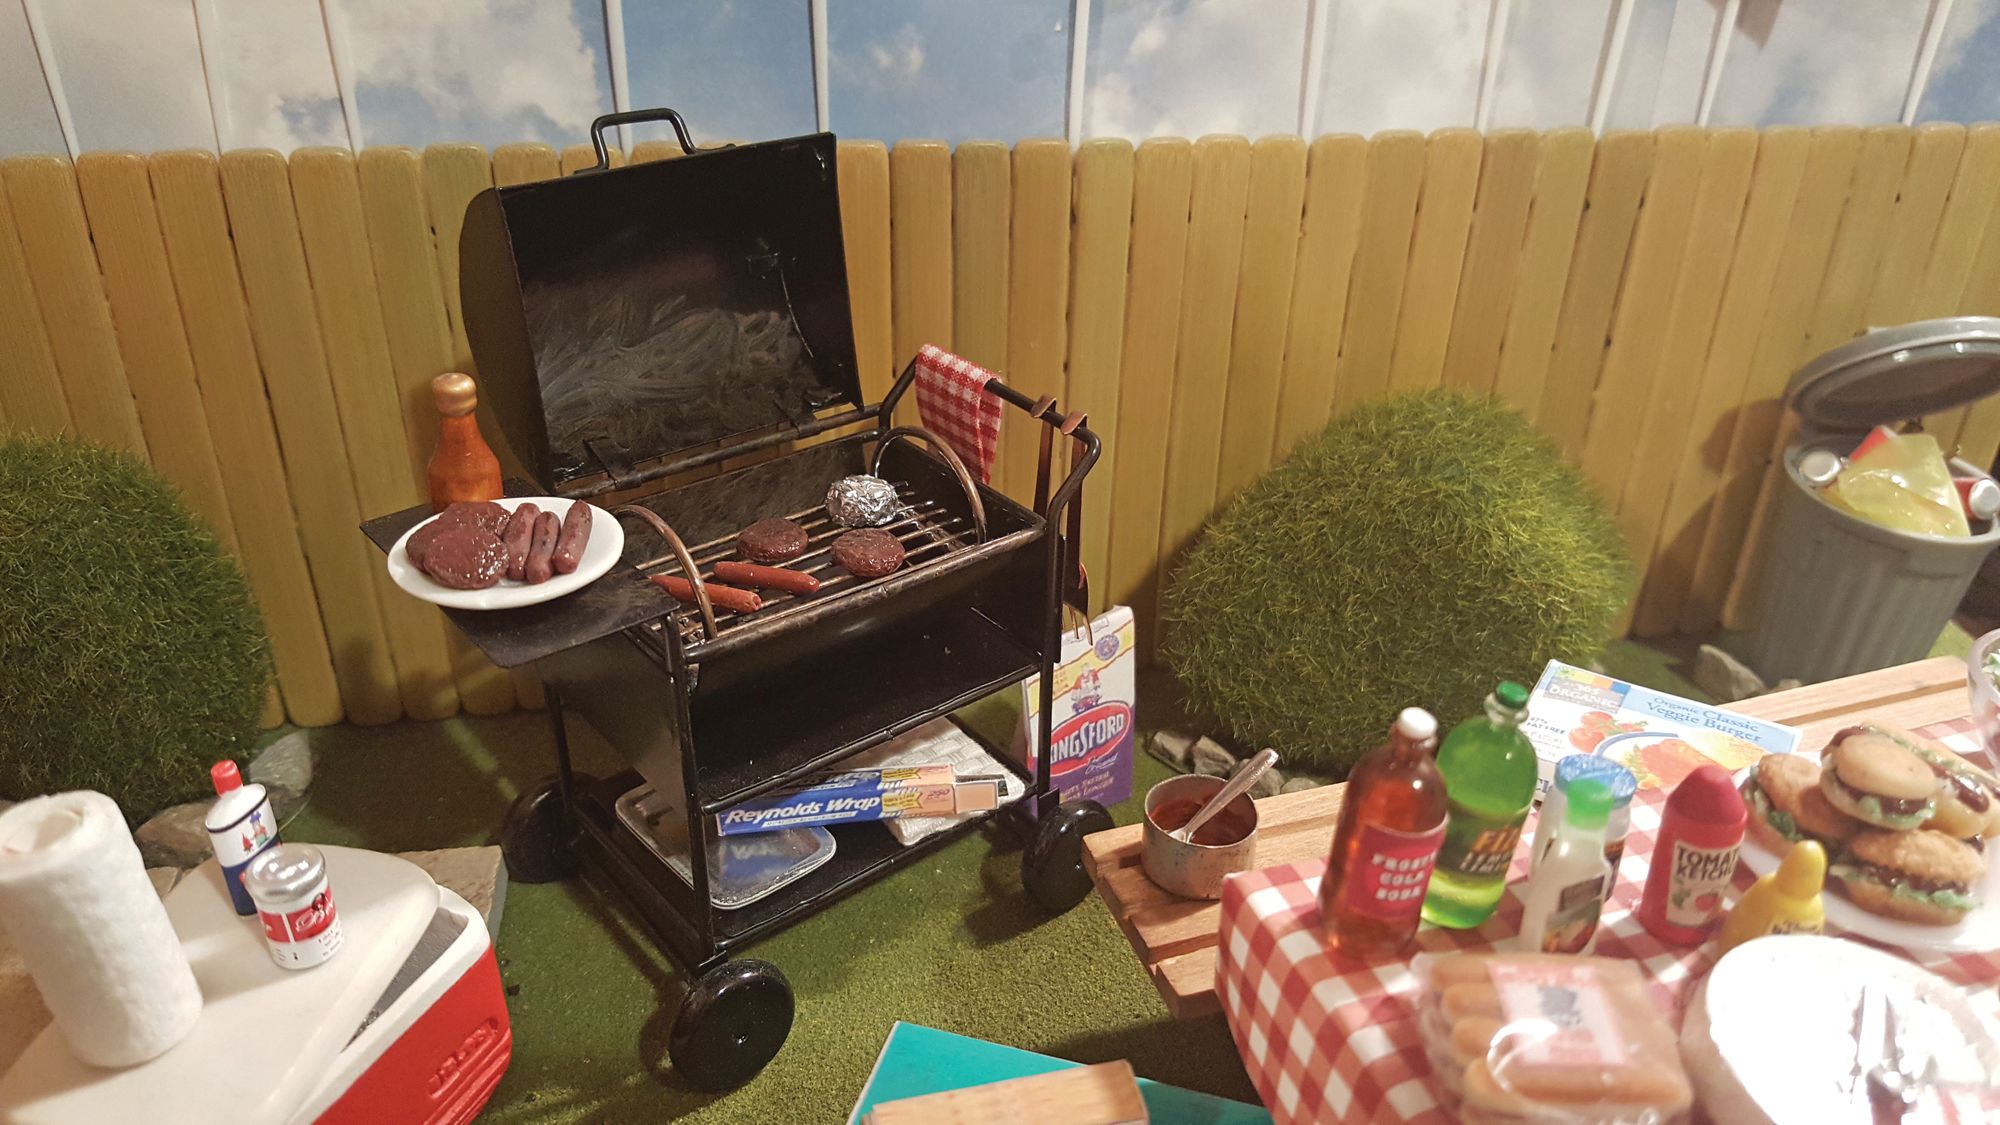 Linda's backyard barbecue